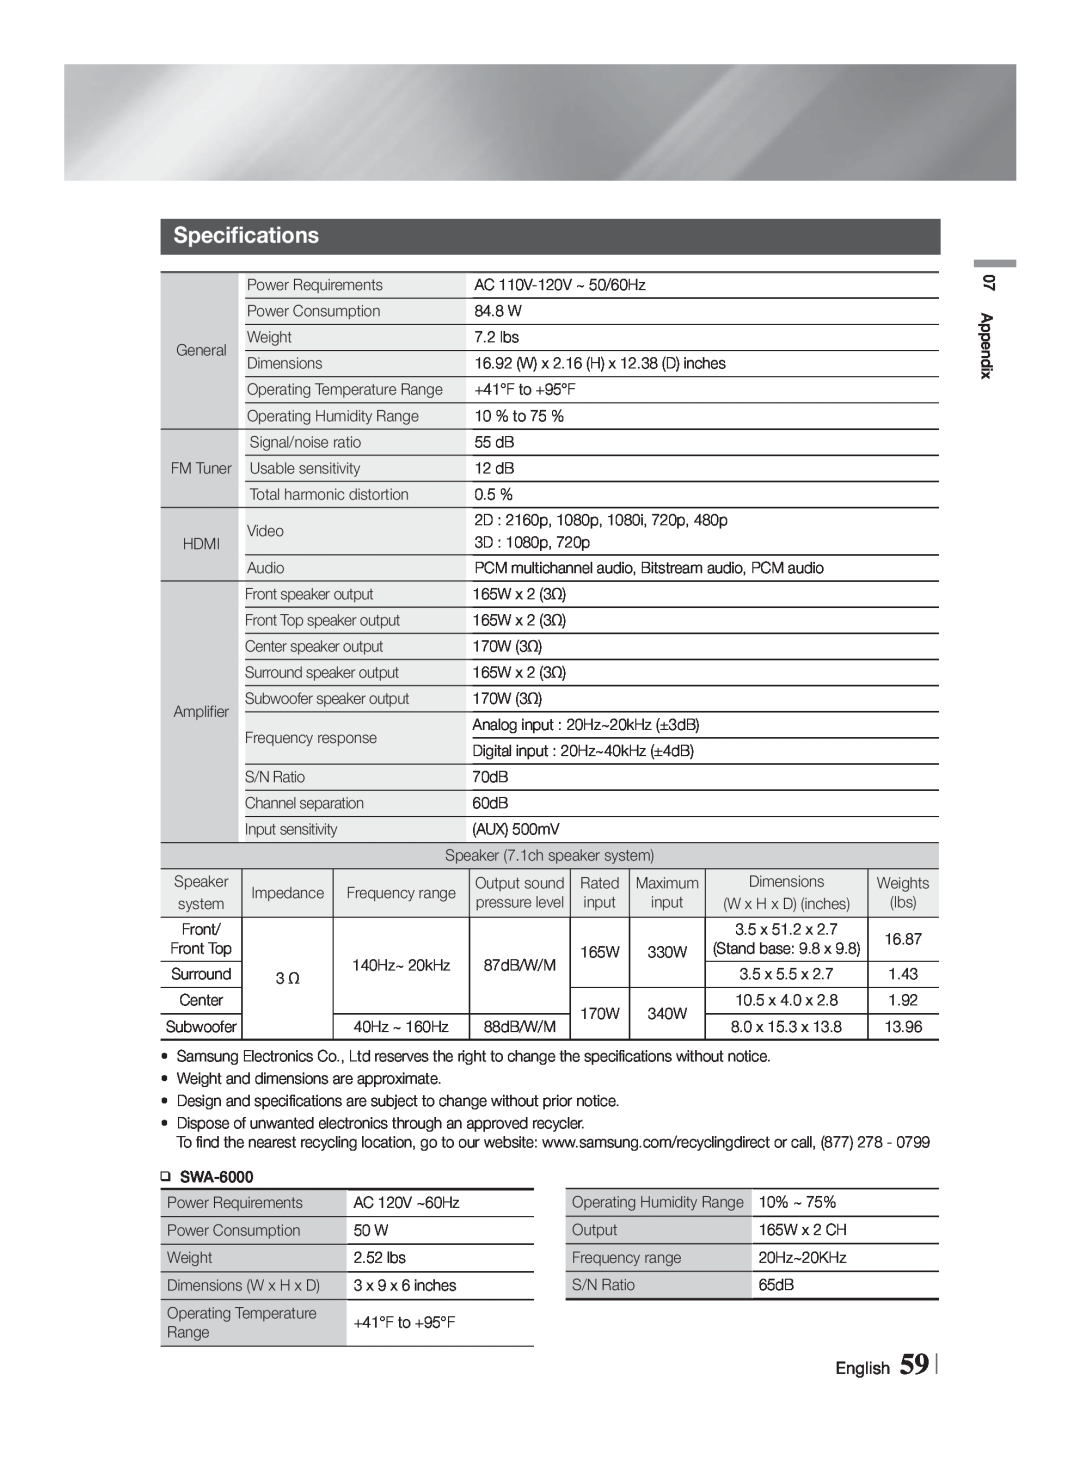 Samsung HT-F9730W/ZA user manual Specifications, English 59 